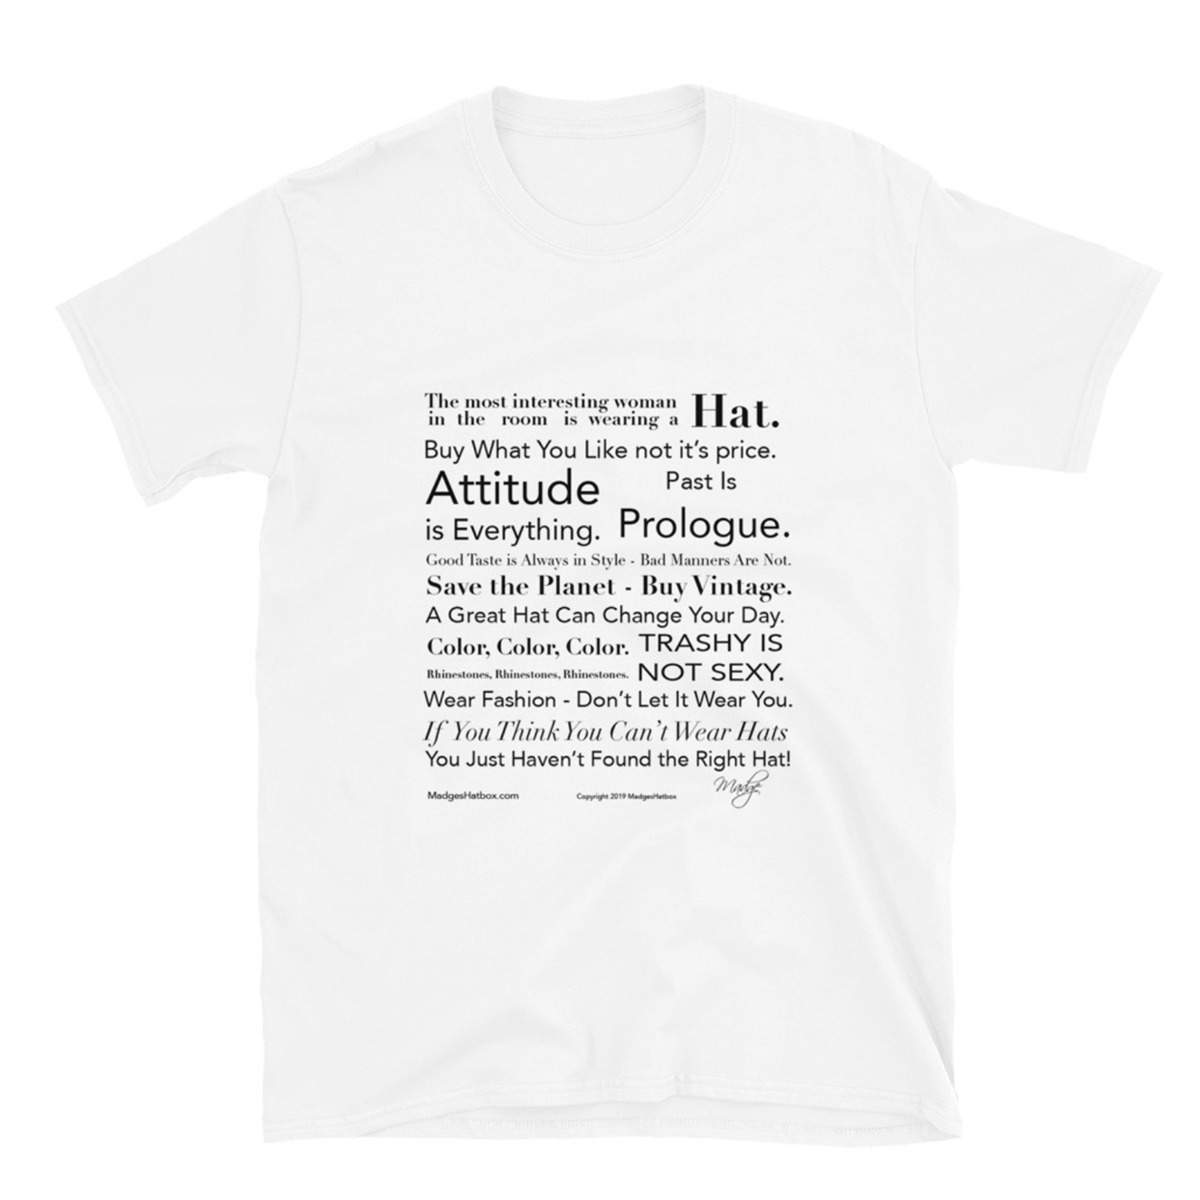 MadgesHatbox t-shirt